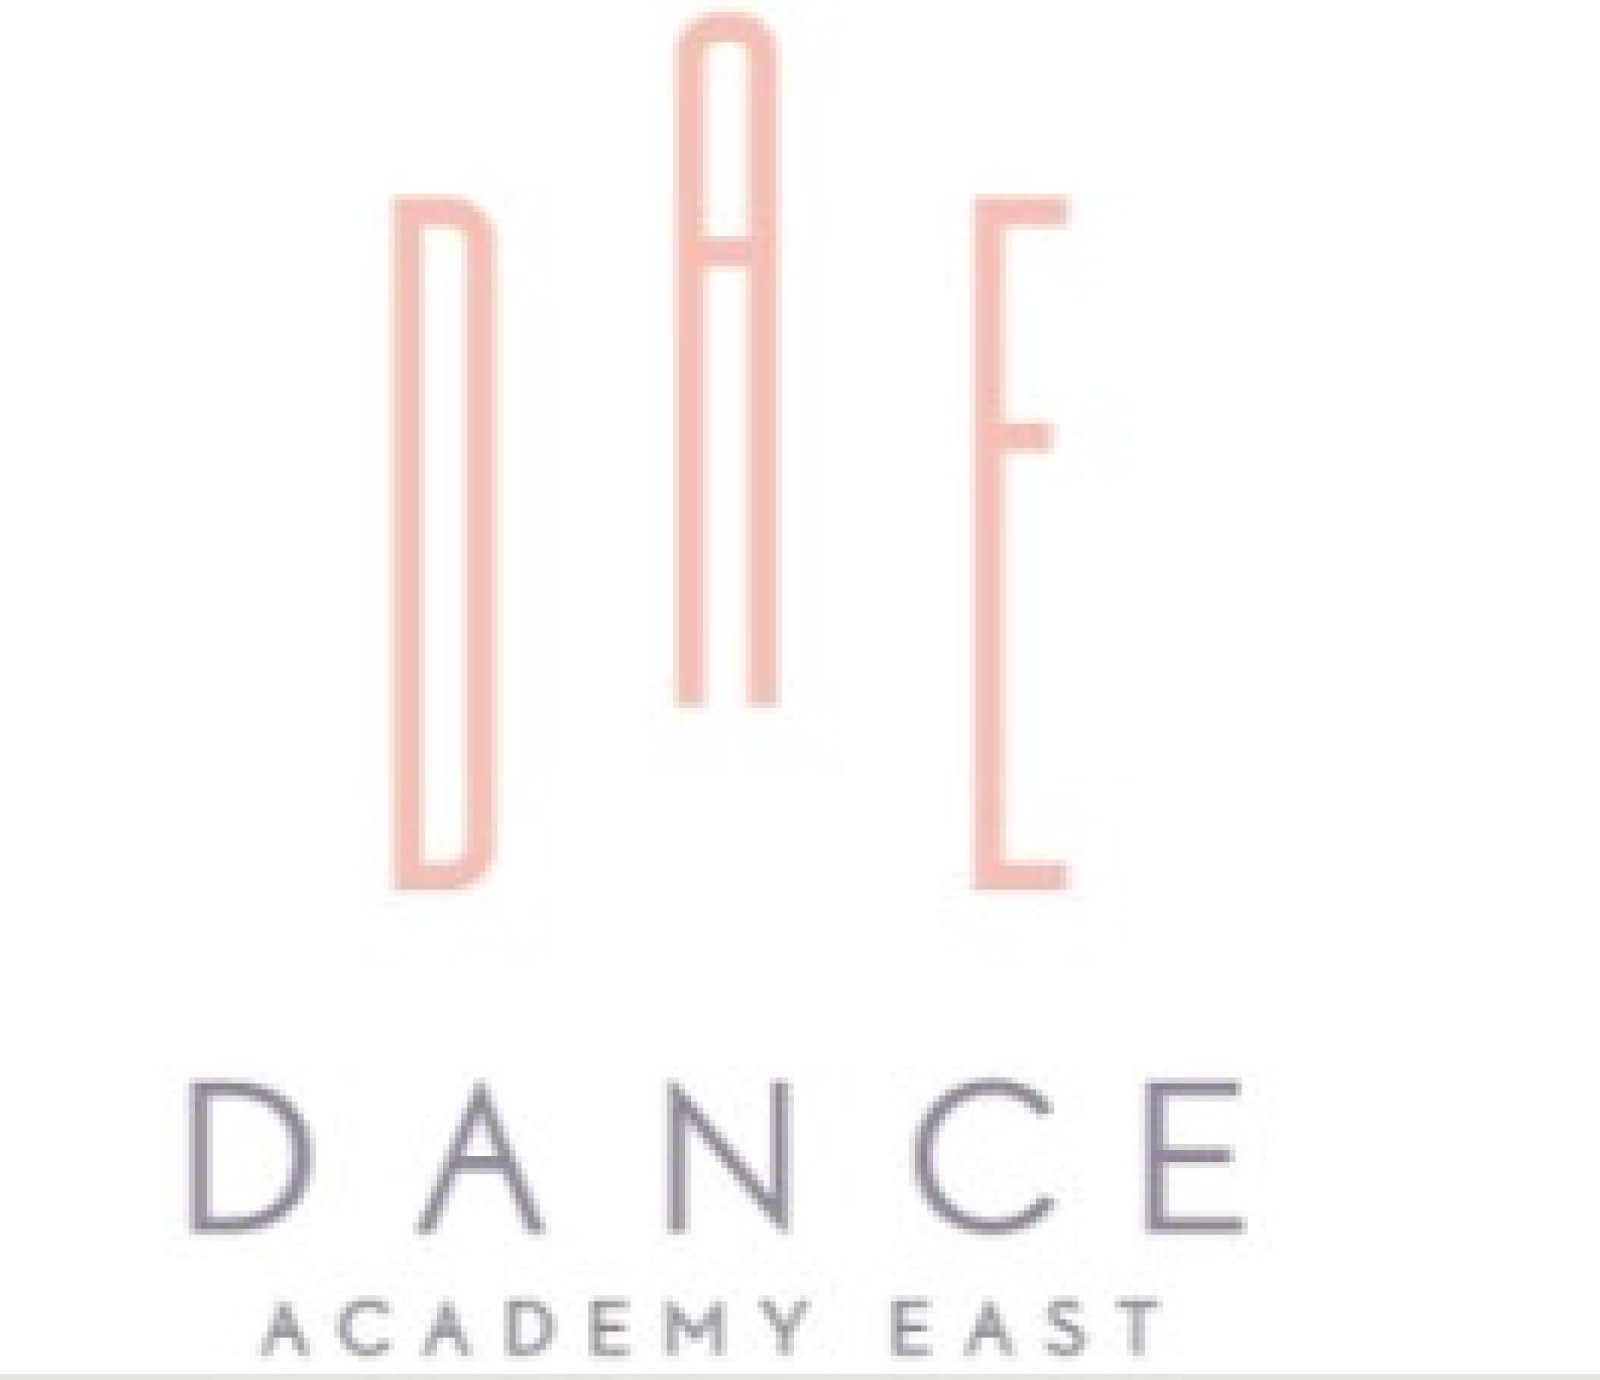 Dance Academy East